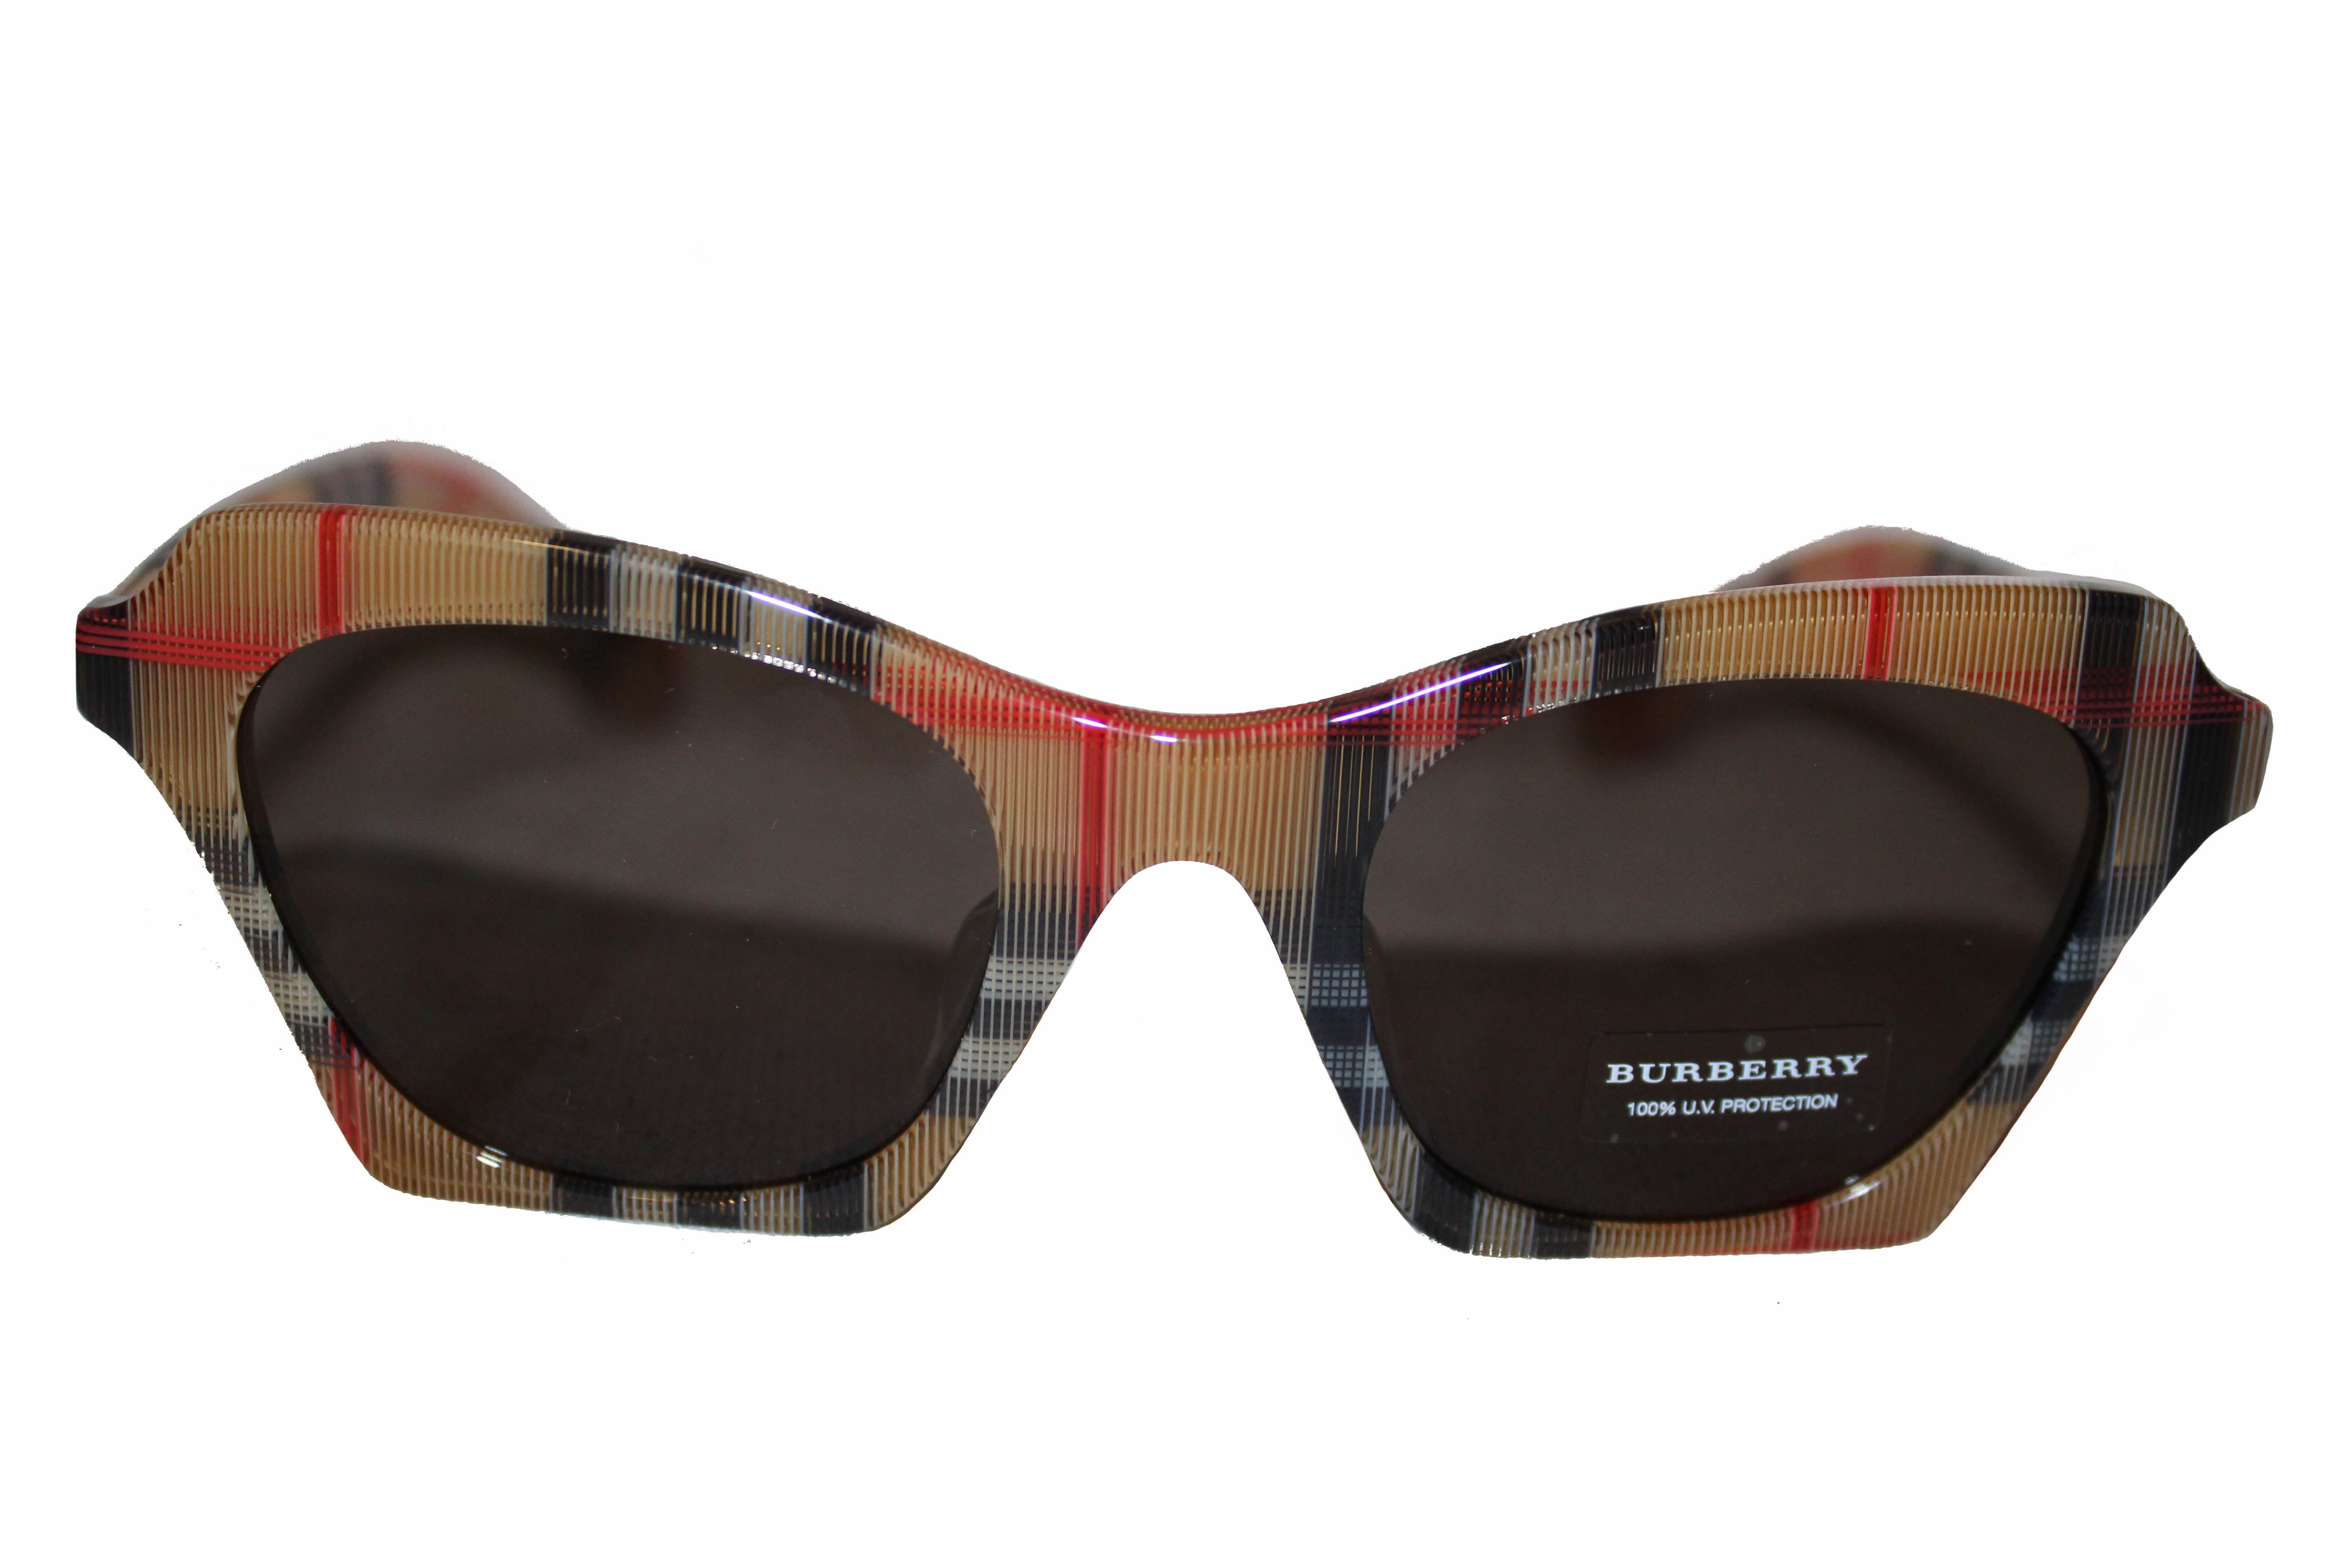 Authentic New Burberry Sunglasses B4283F 3778/3 Vintage Check Sunglas